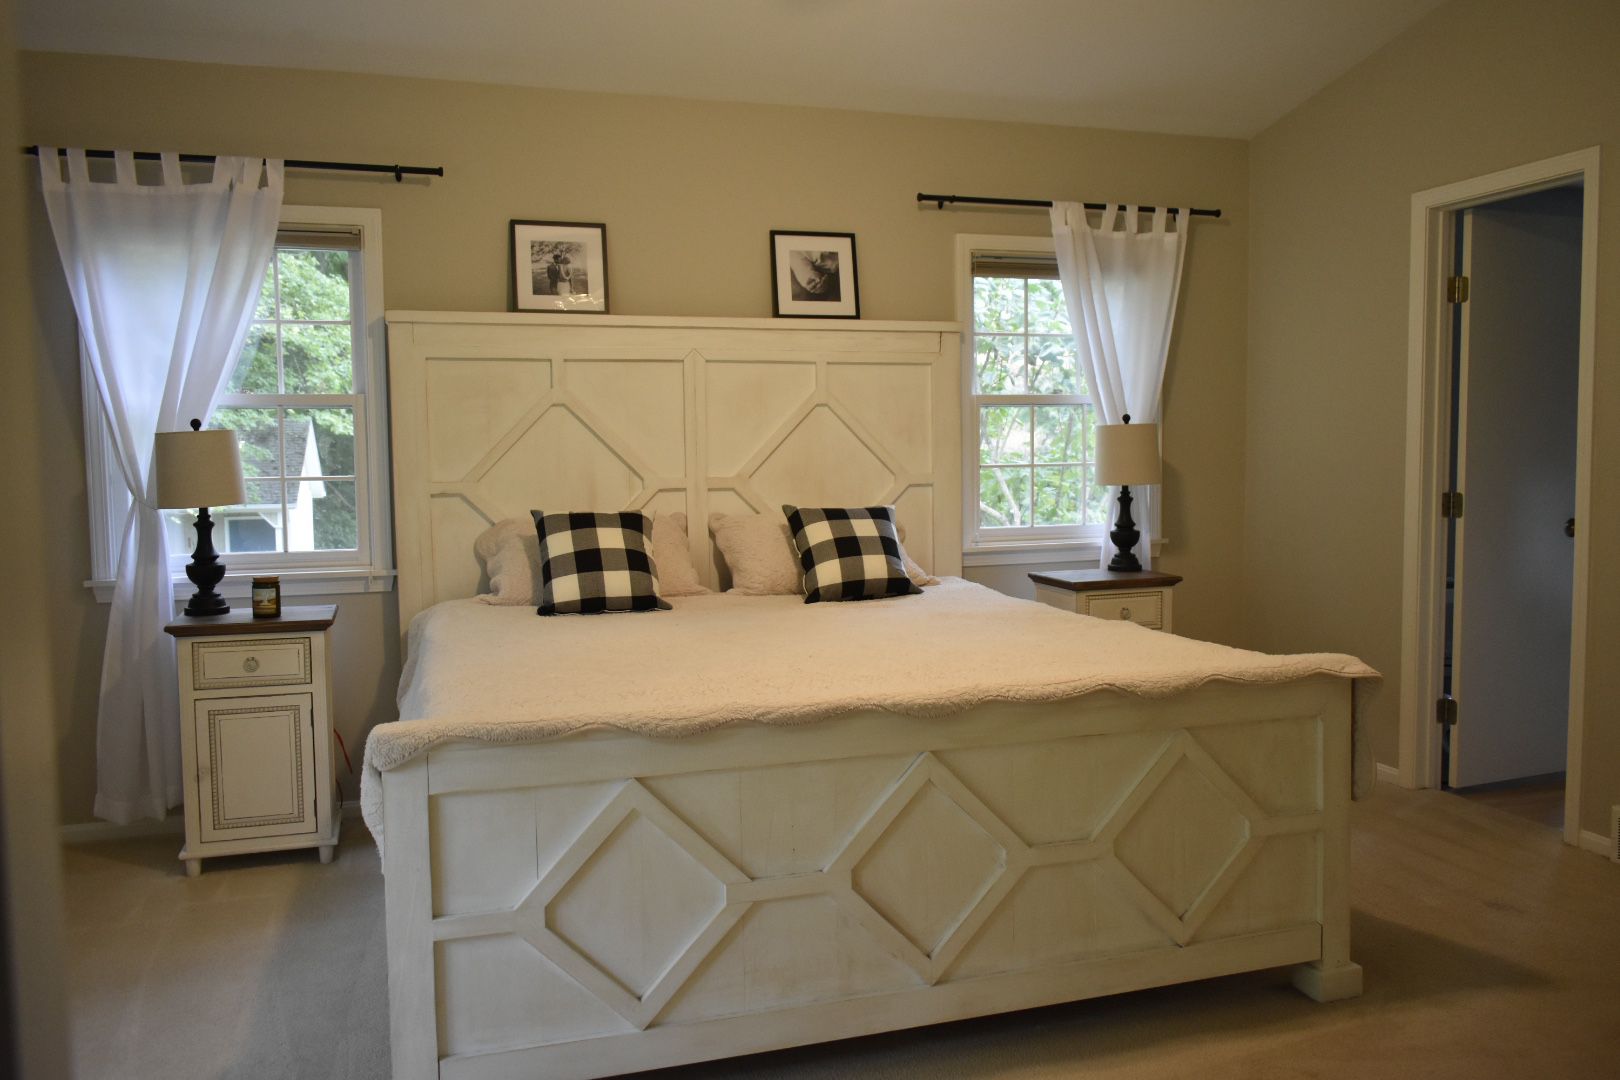 King bed frame - custom made, farmhouse